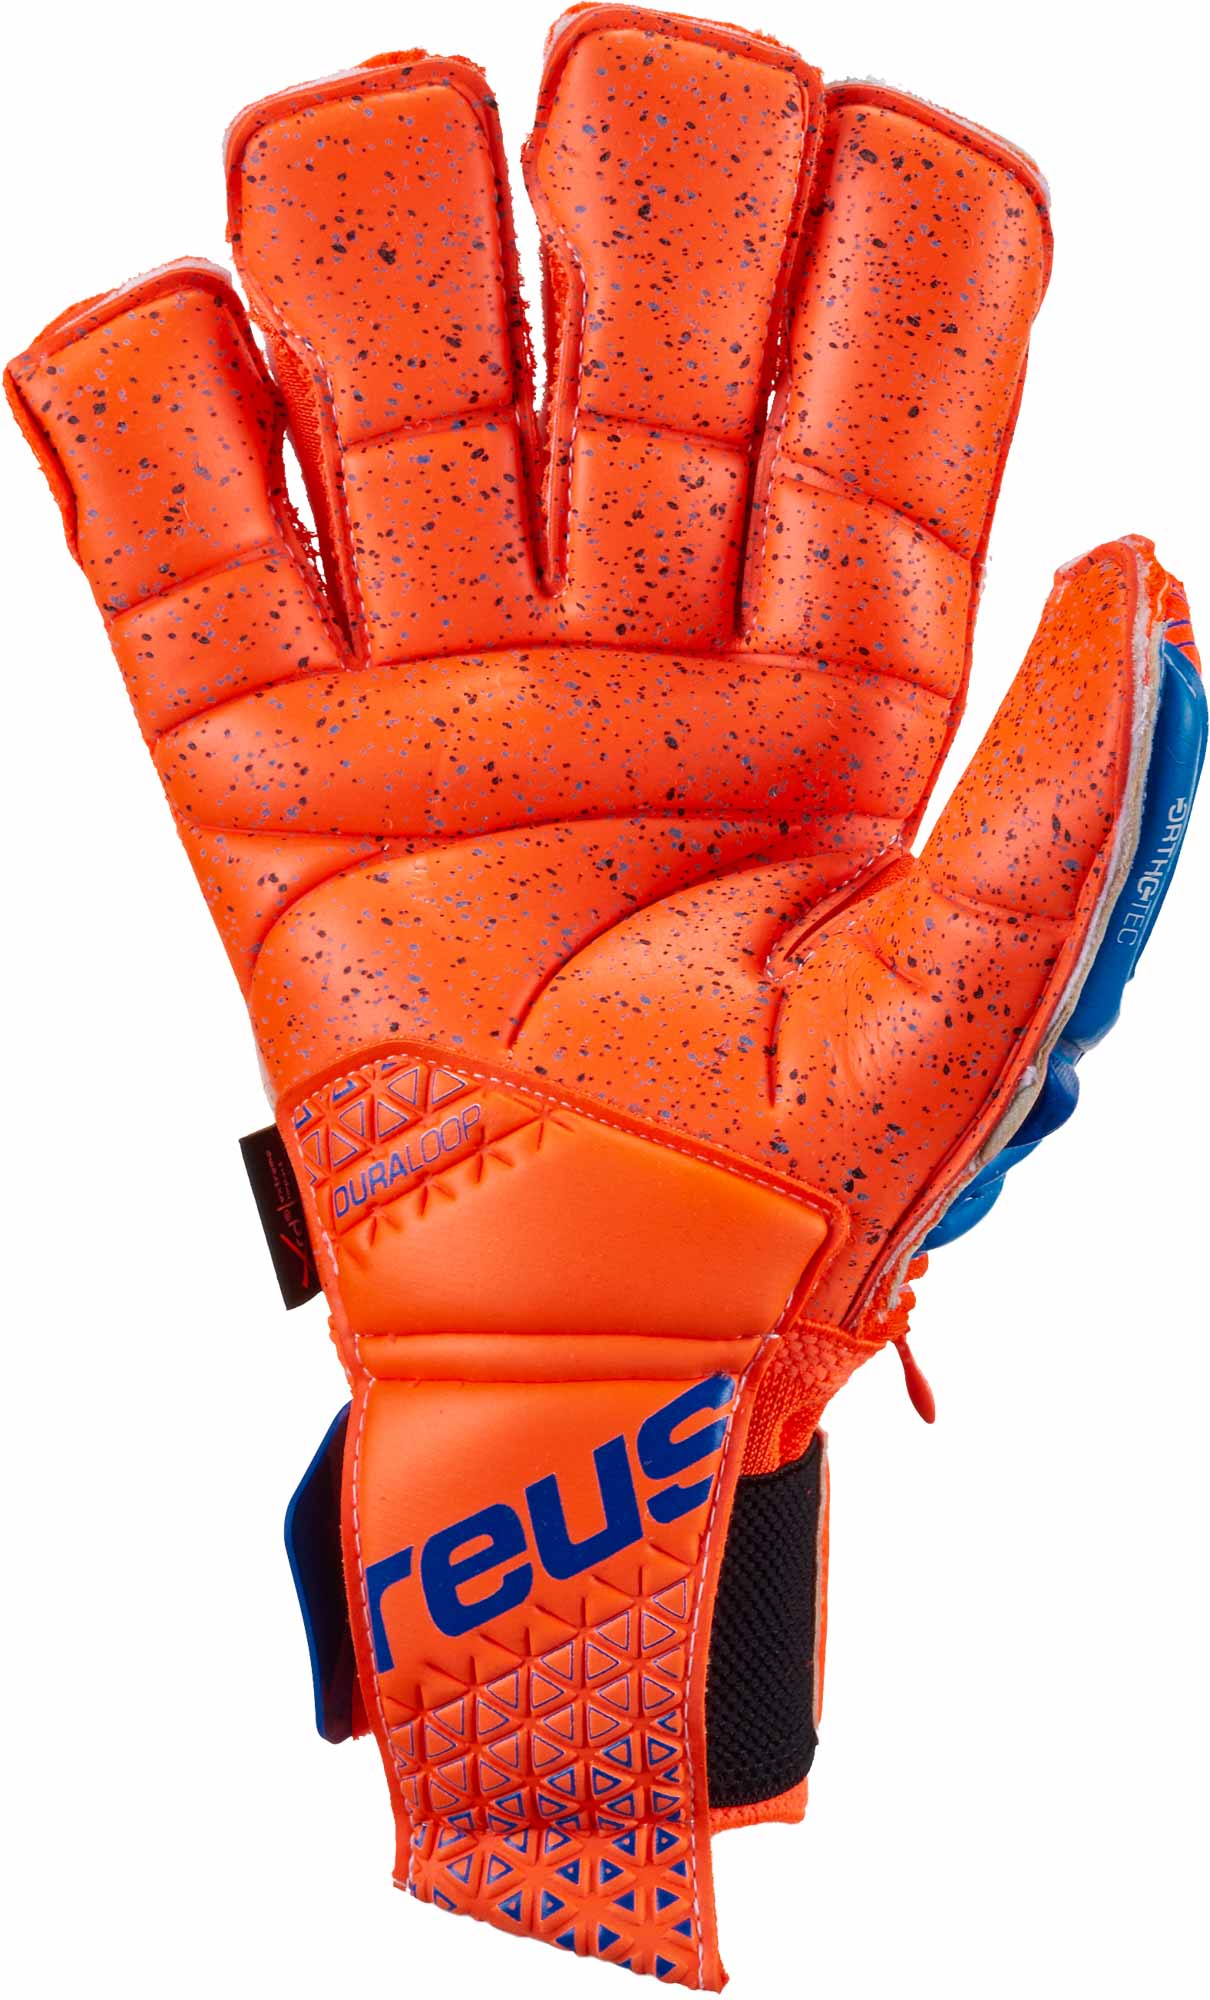 Reusch Prisma G3 Ortho-Tec Goalkeeper Gloves - Shocking Orange & - Soccer Master